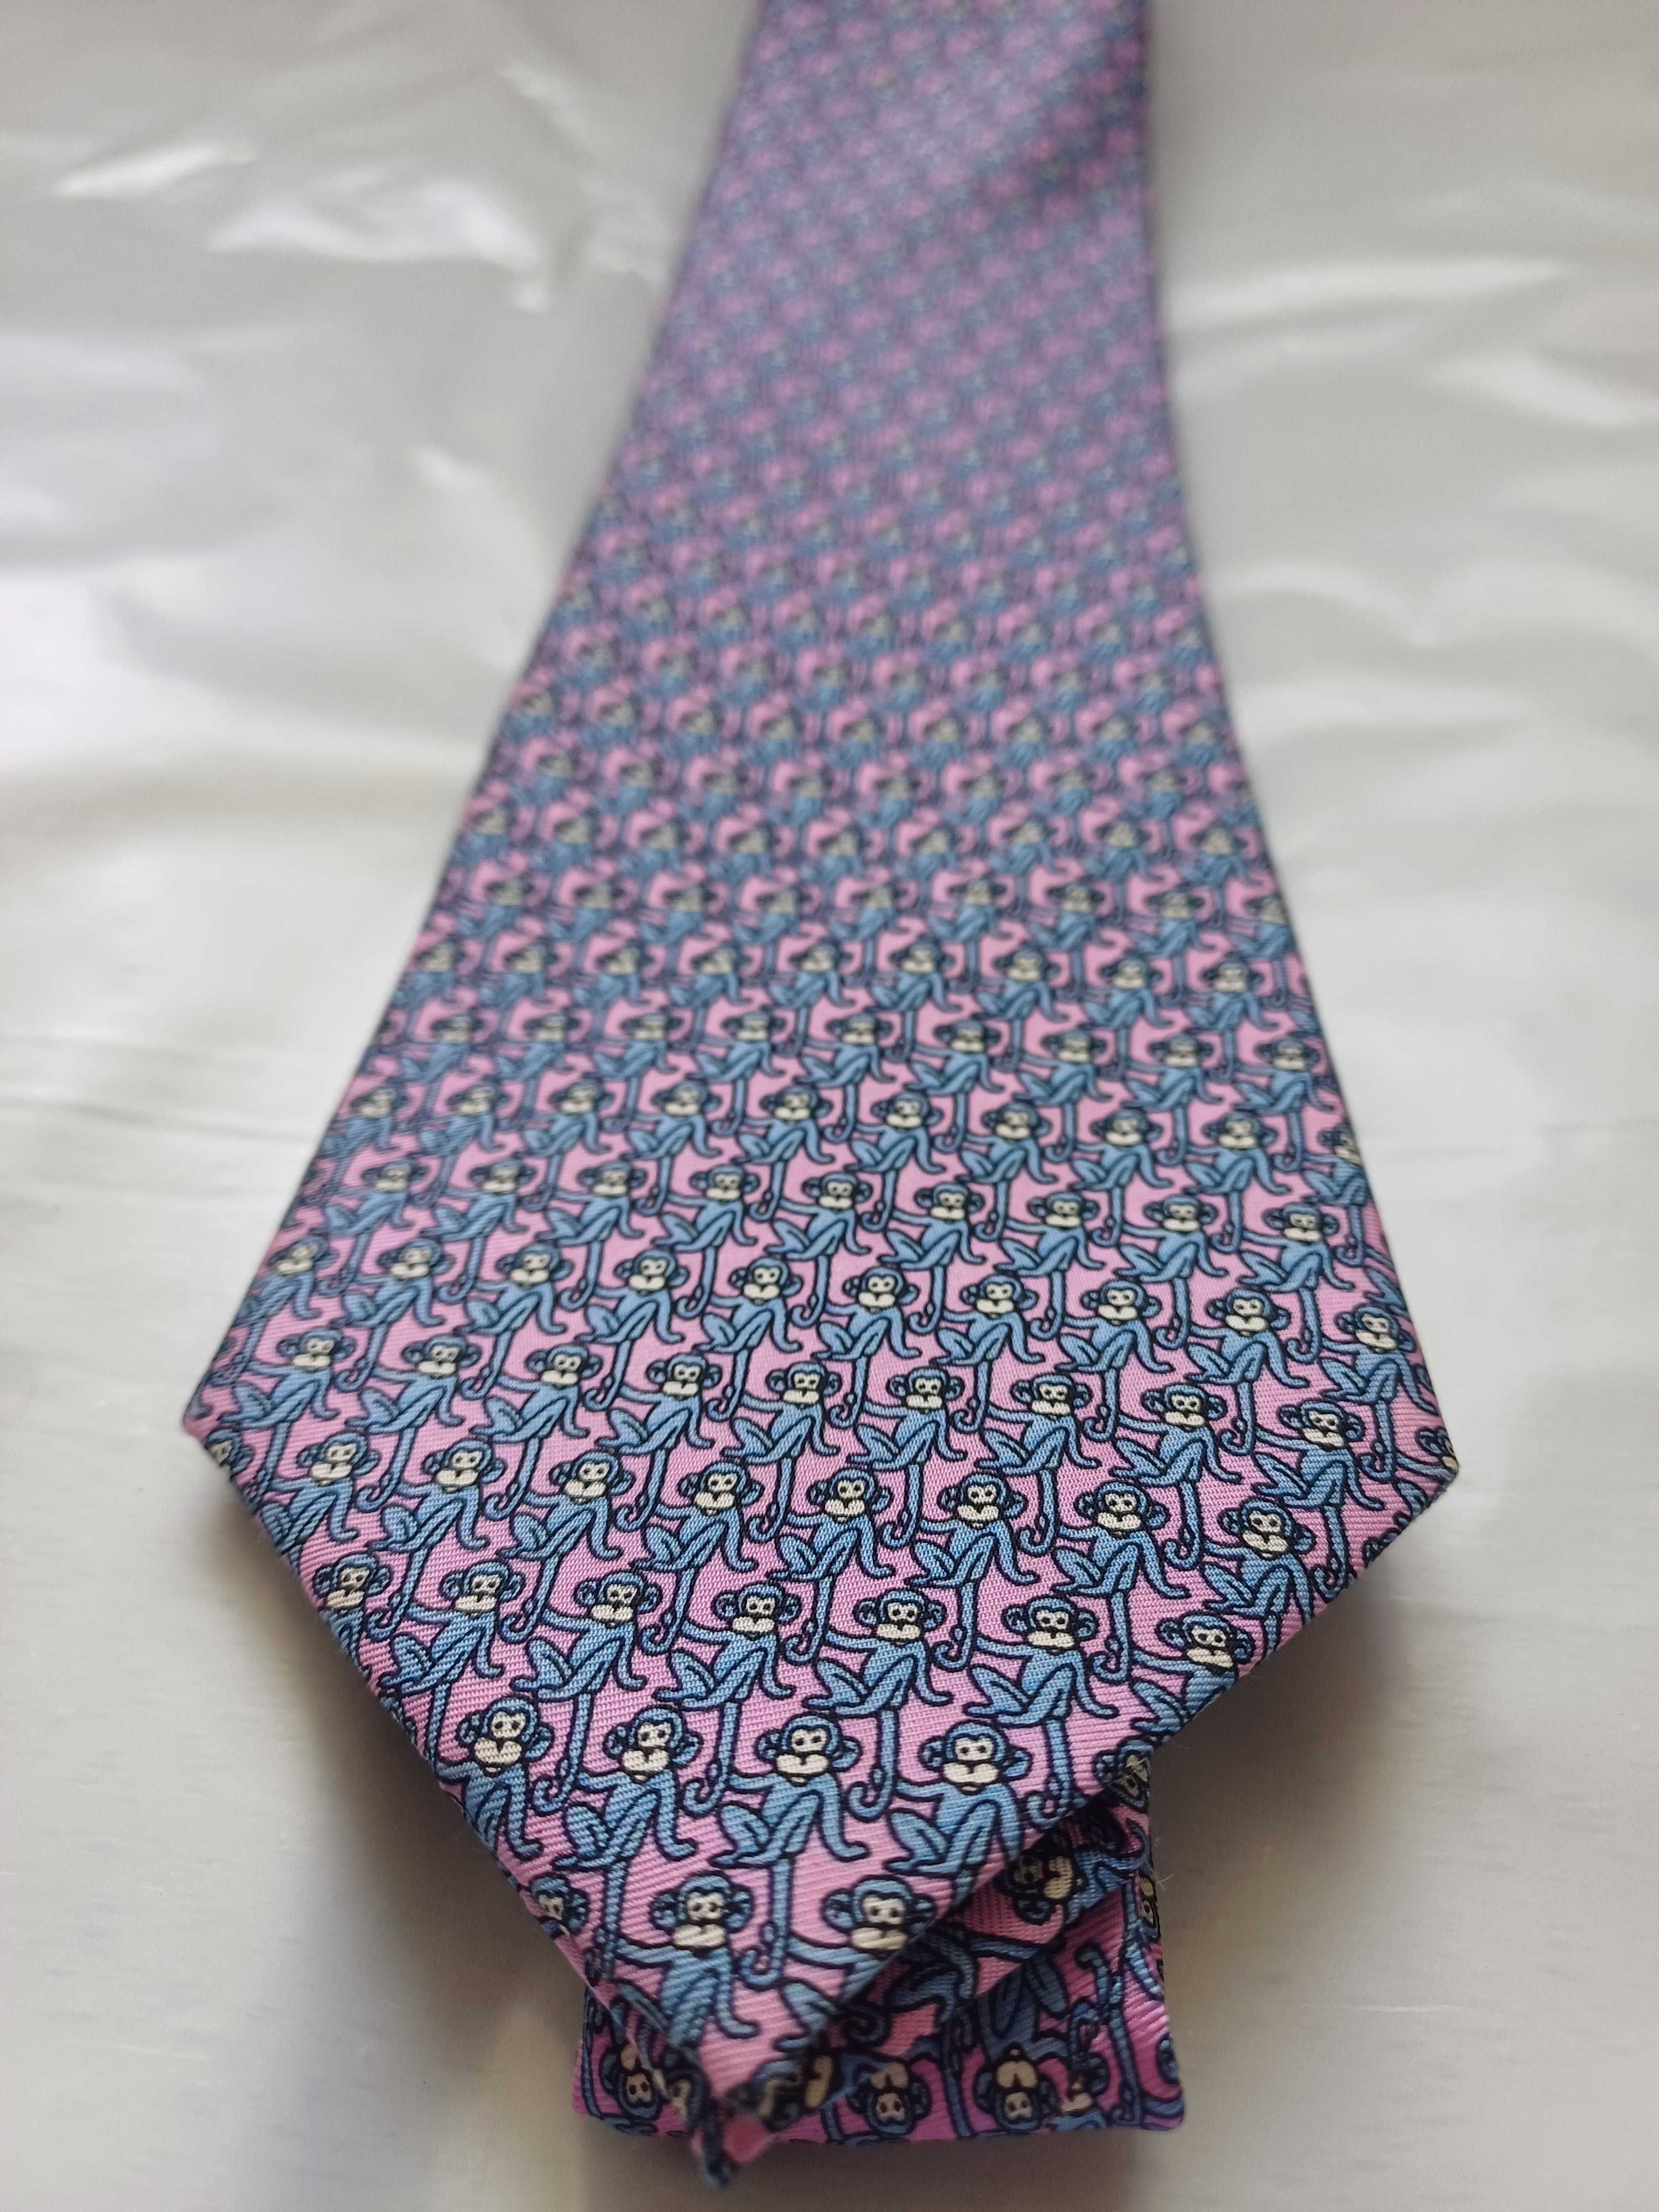 Michelsons of London Limited Edition jedwabny krawat małpki